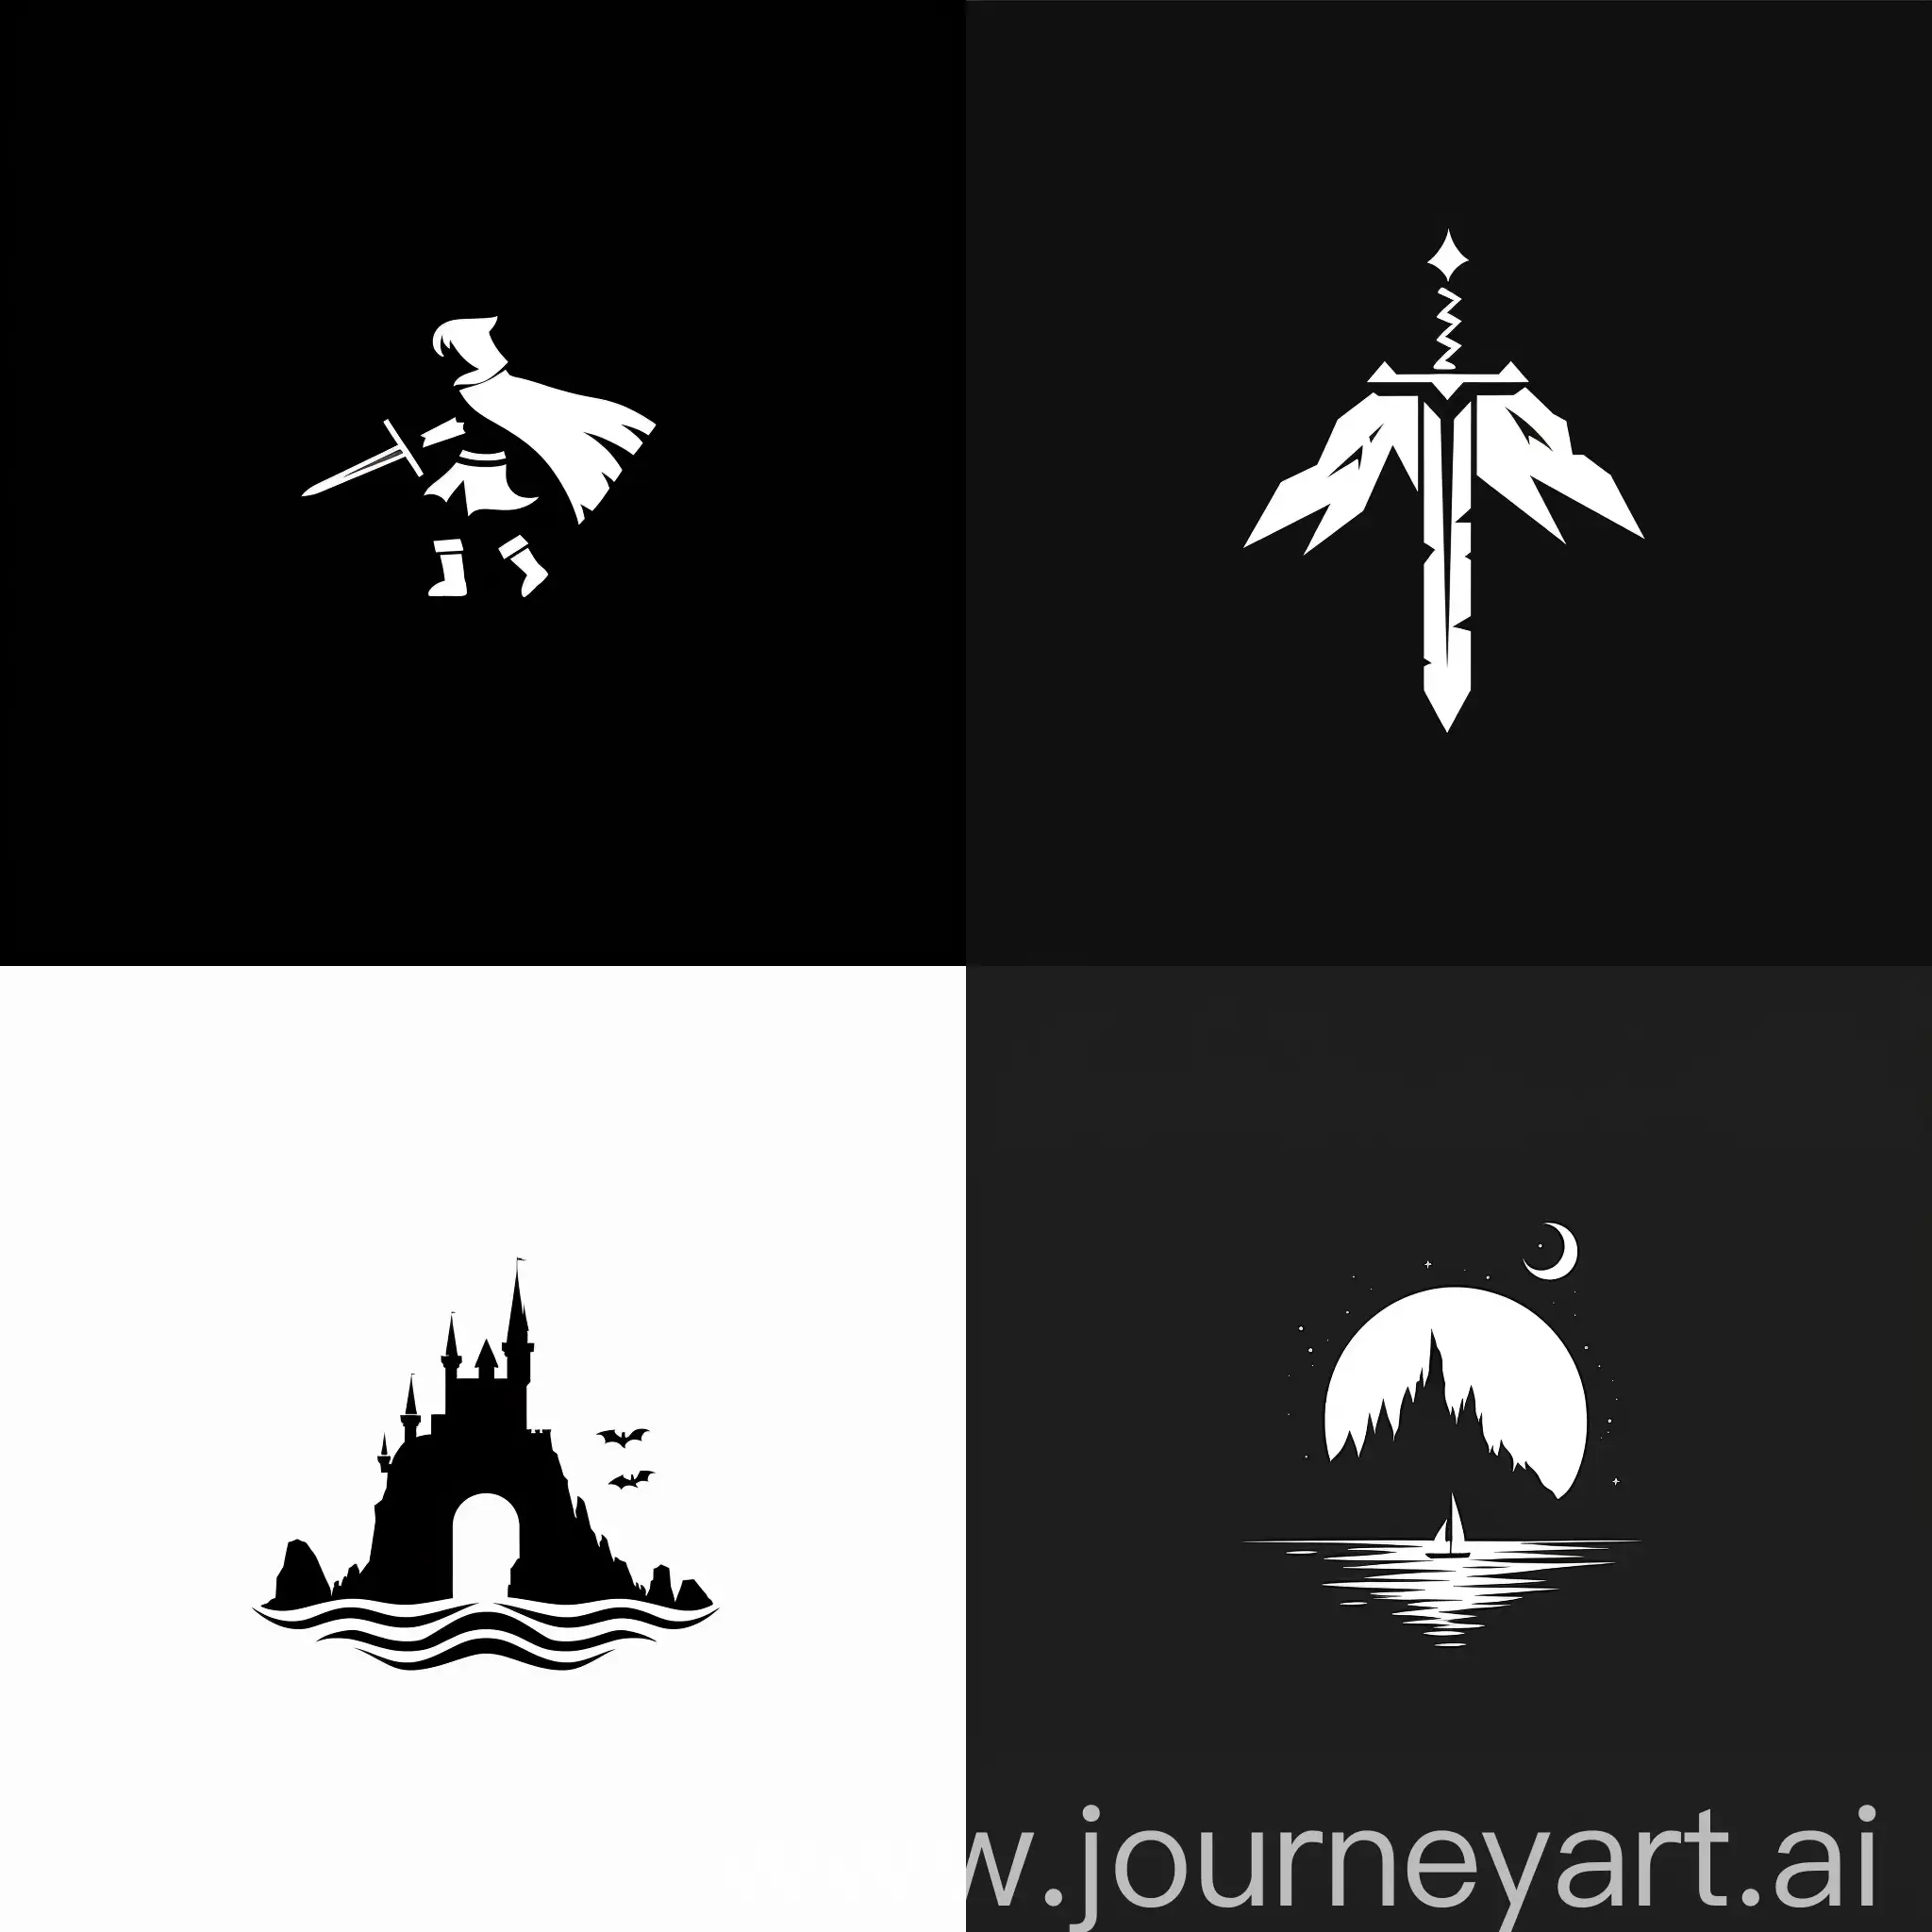 Adventure, fantasy, logo, simple, minimalist, high resolution, black and white